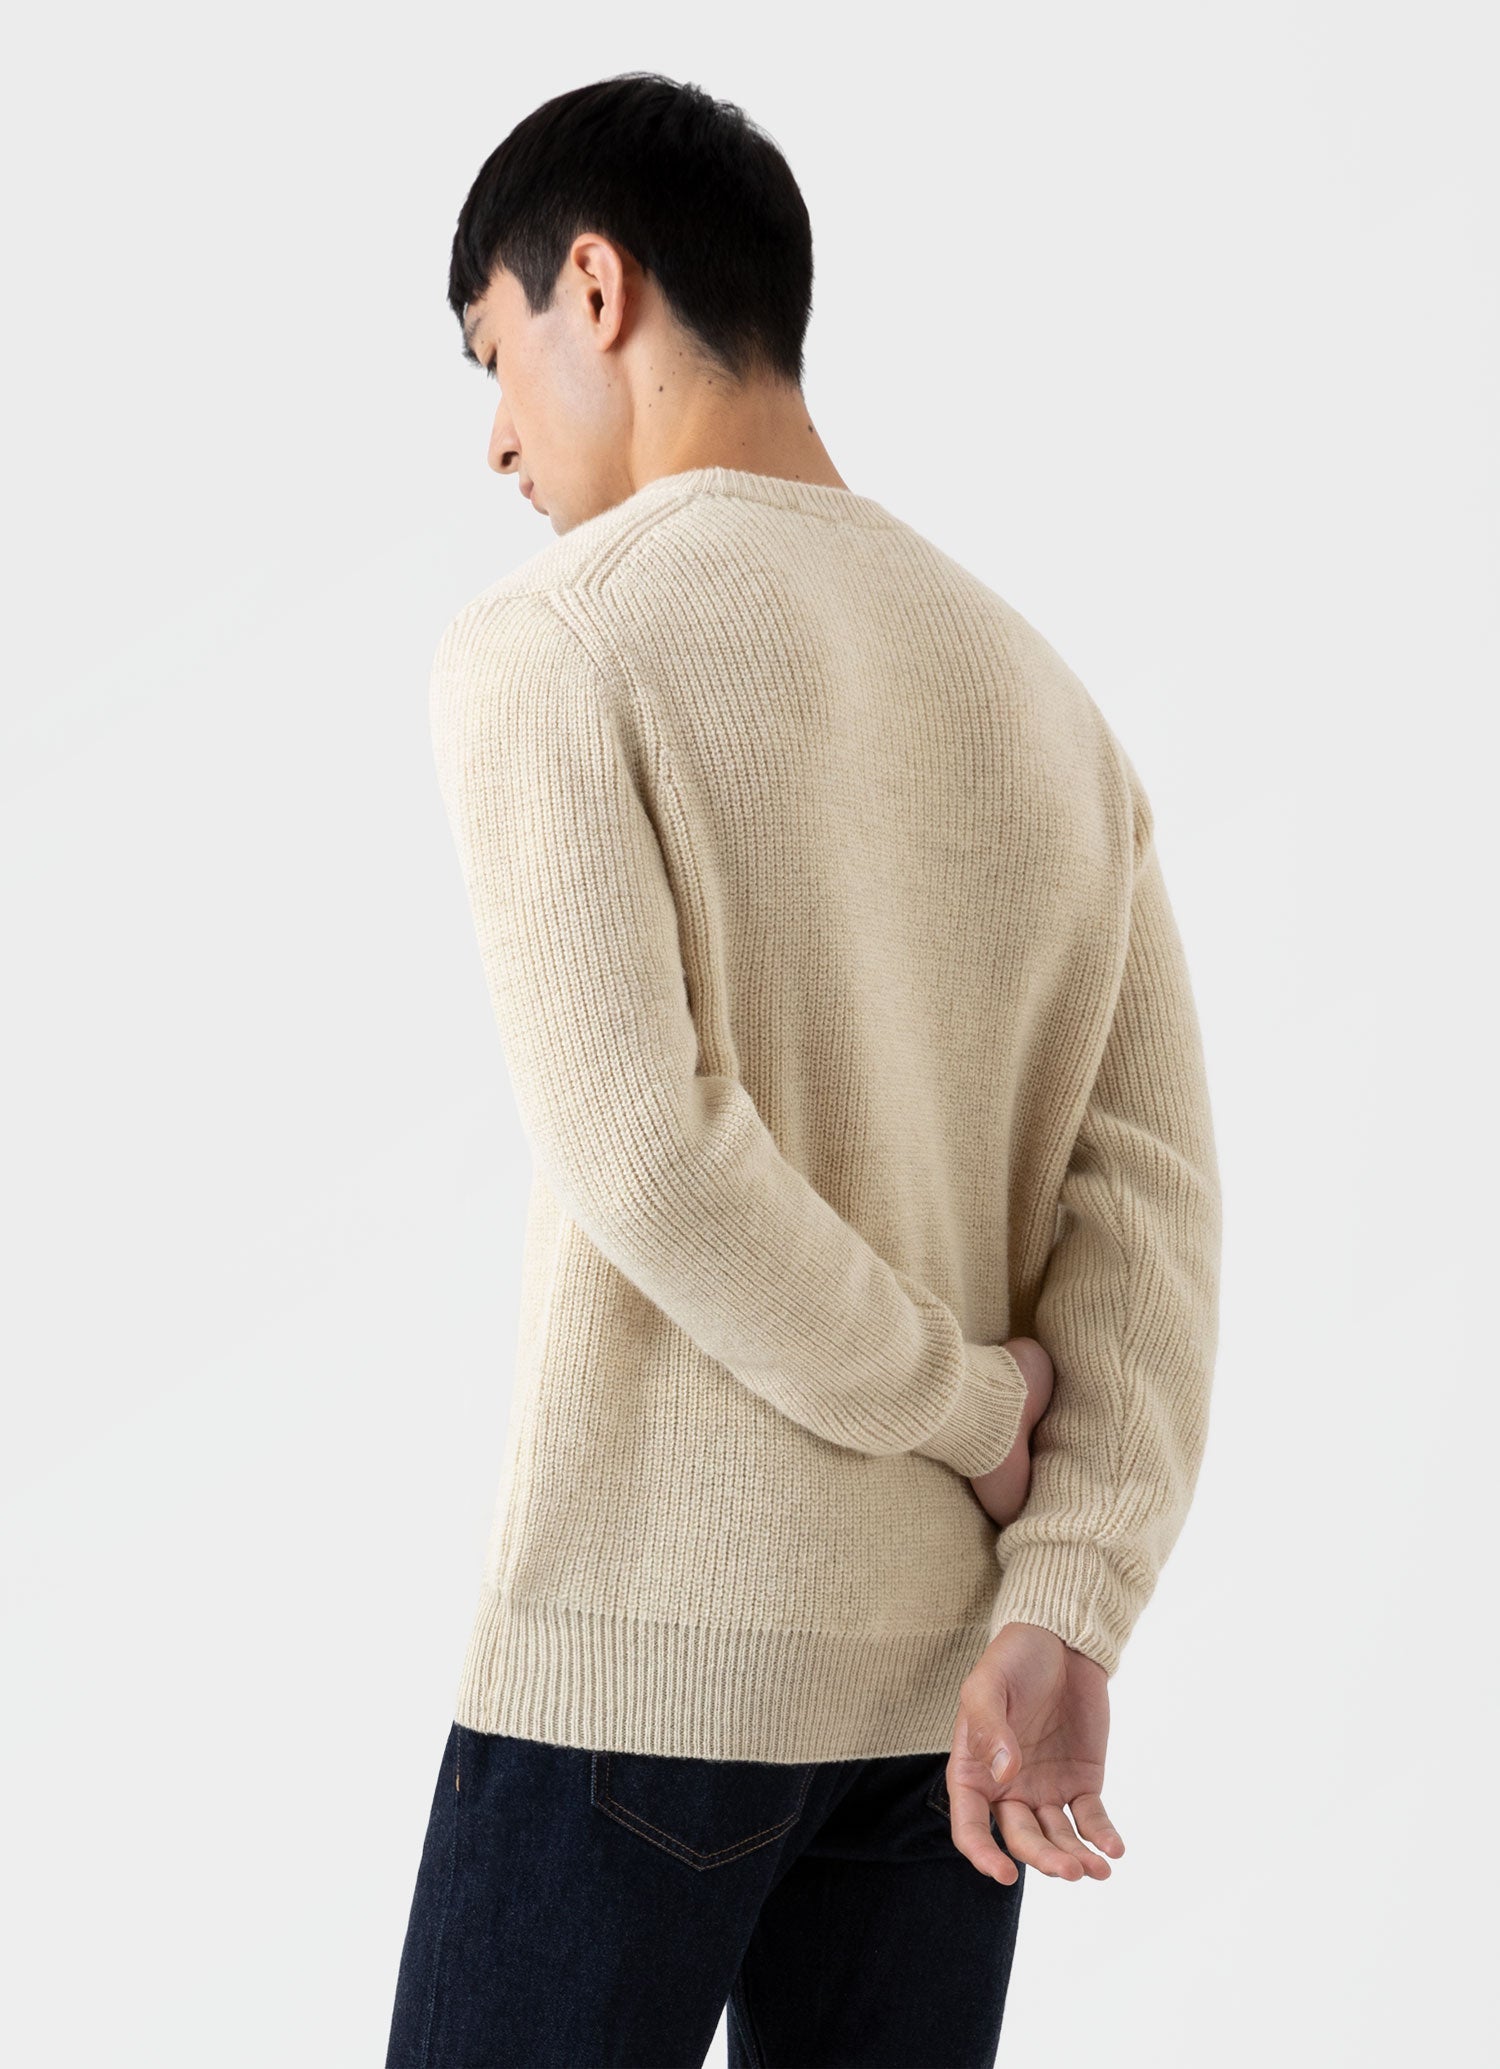 Men's Luxury British Wool Jumper in Natural Ecru